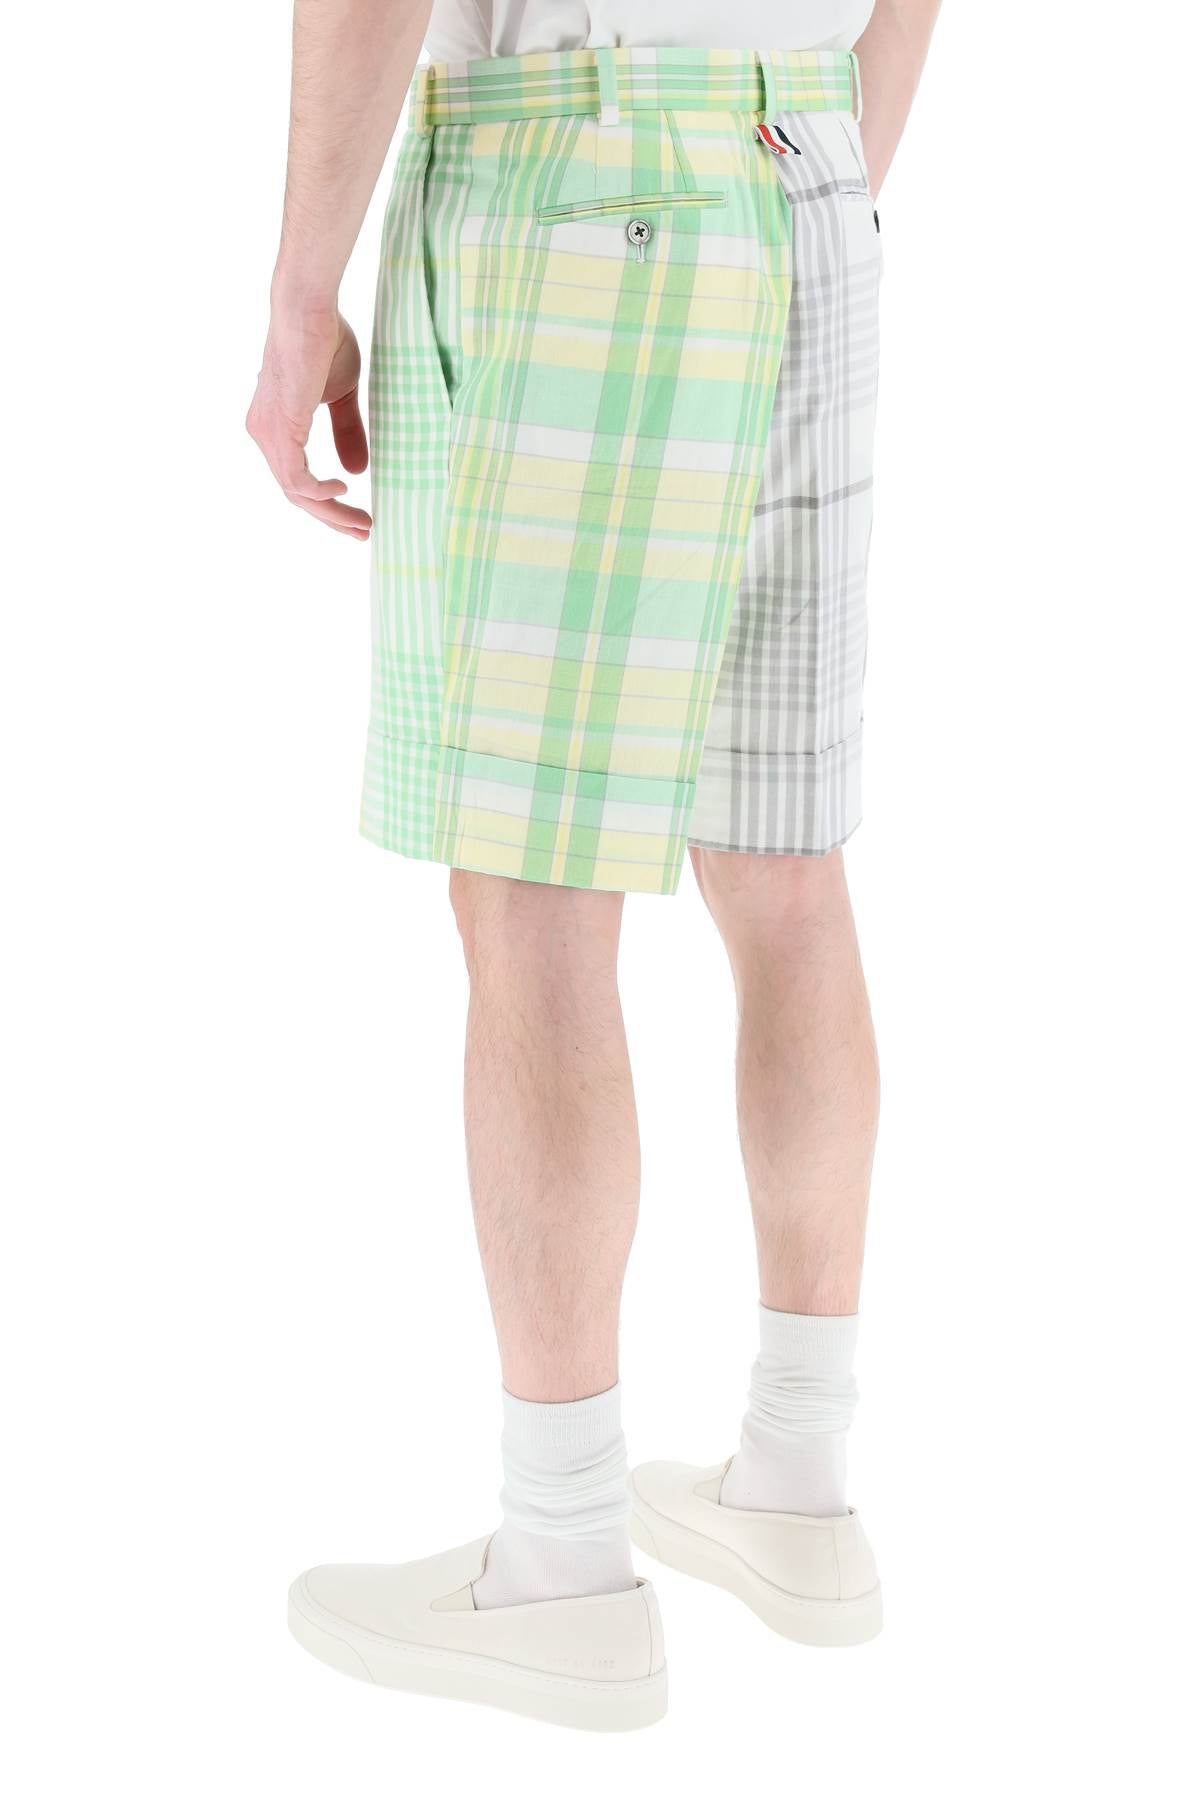 Thom browne funmix madras cotton shorts-2